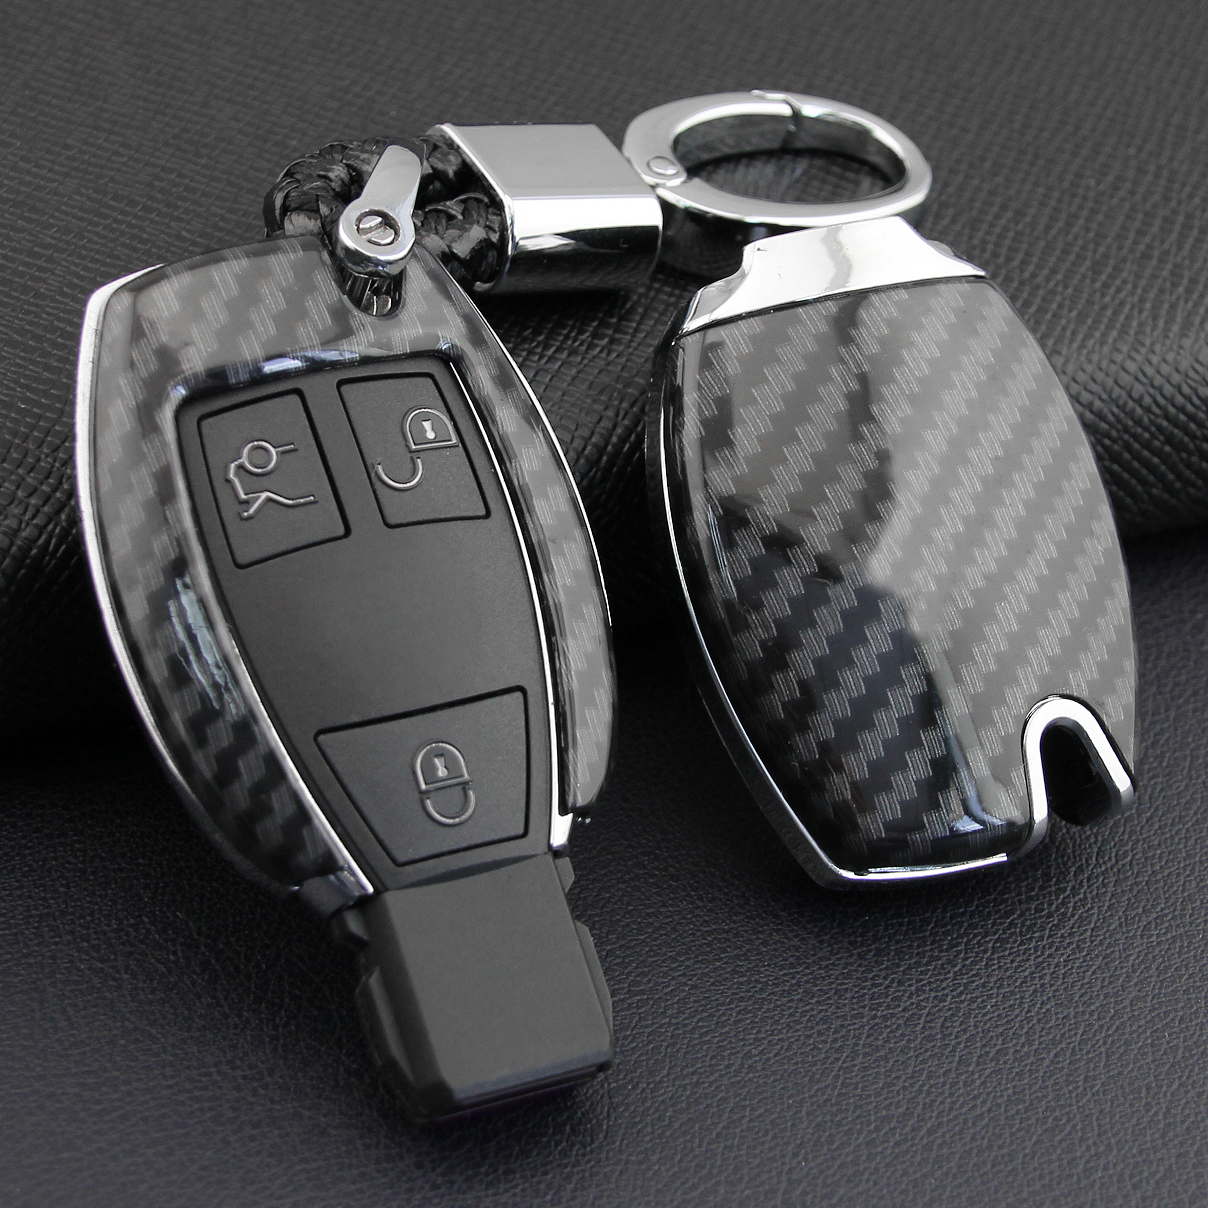 

Carbon Fiber Hard Car Key Fob Chain Cover Case For Mercedes-Benz W205 W212 X253 W166 X204 X166 W176 W246 W204 W222 W463 X156, As described